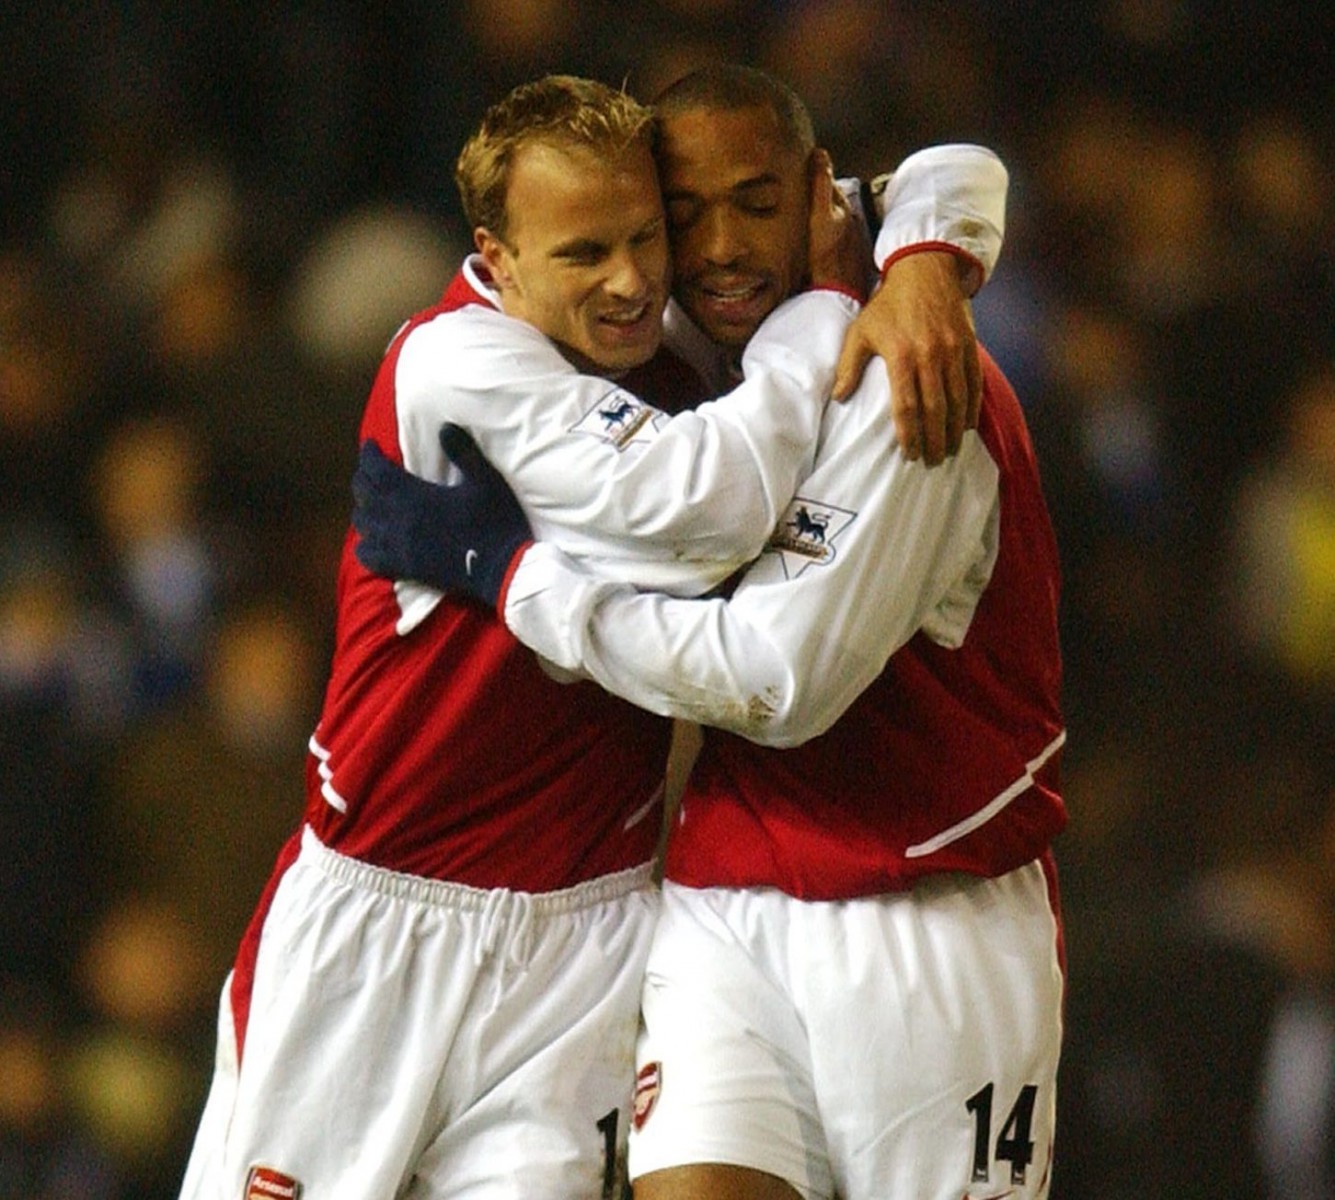 Thierry Henry and Dennis Bergkamp were legendary strikepartners during Arsenal's golden age under Arsene Wenger